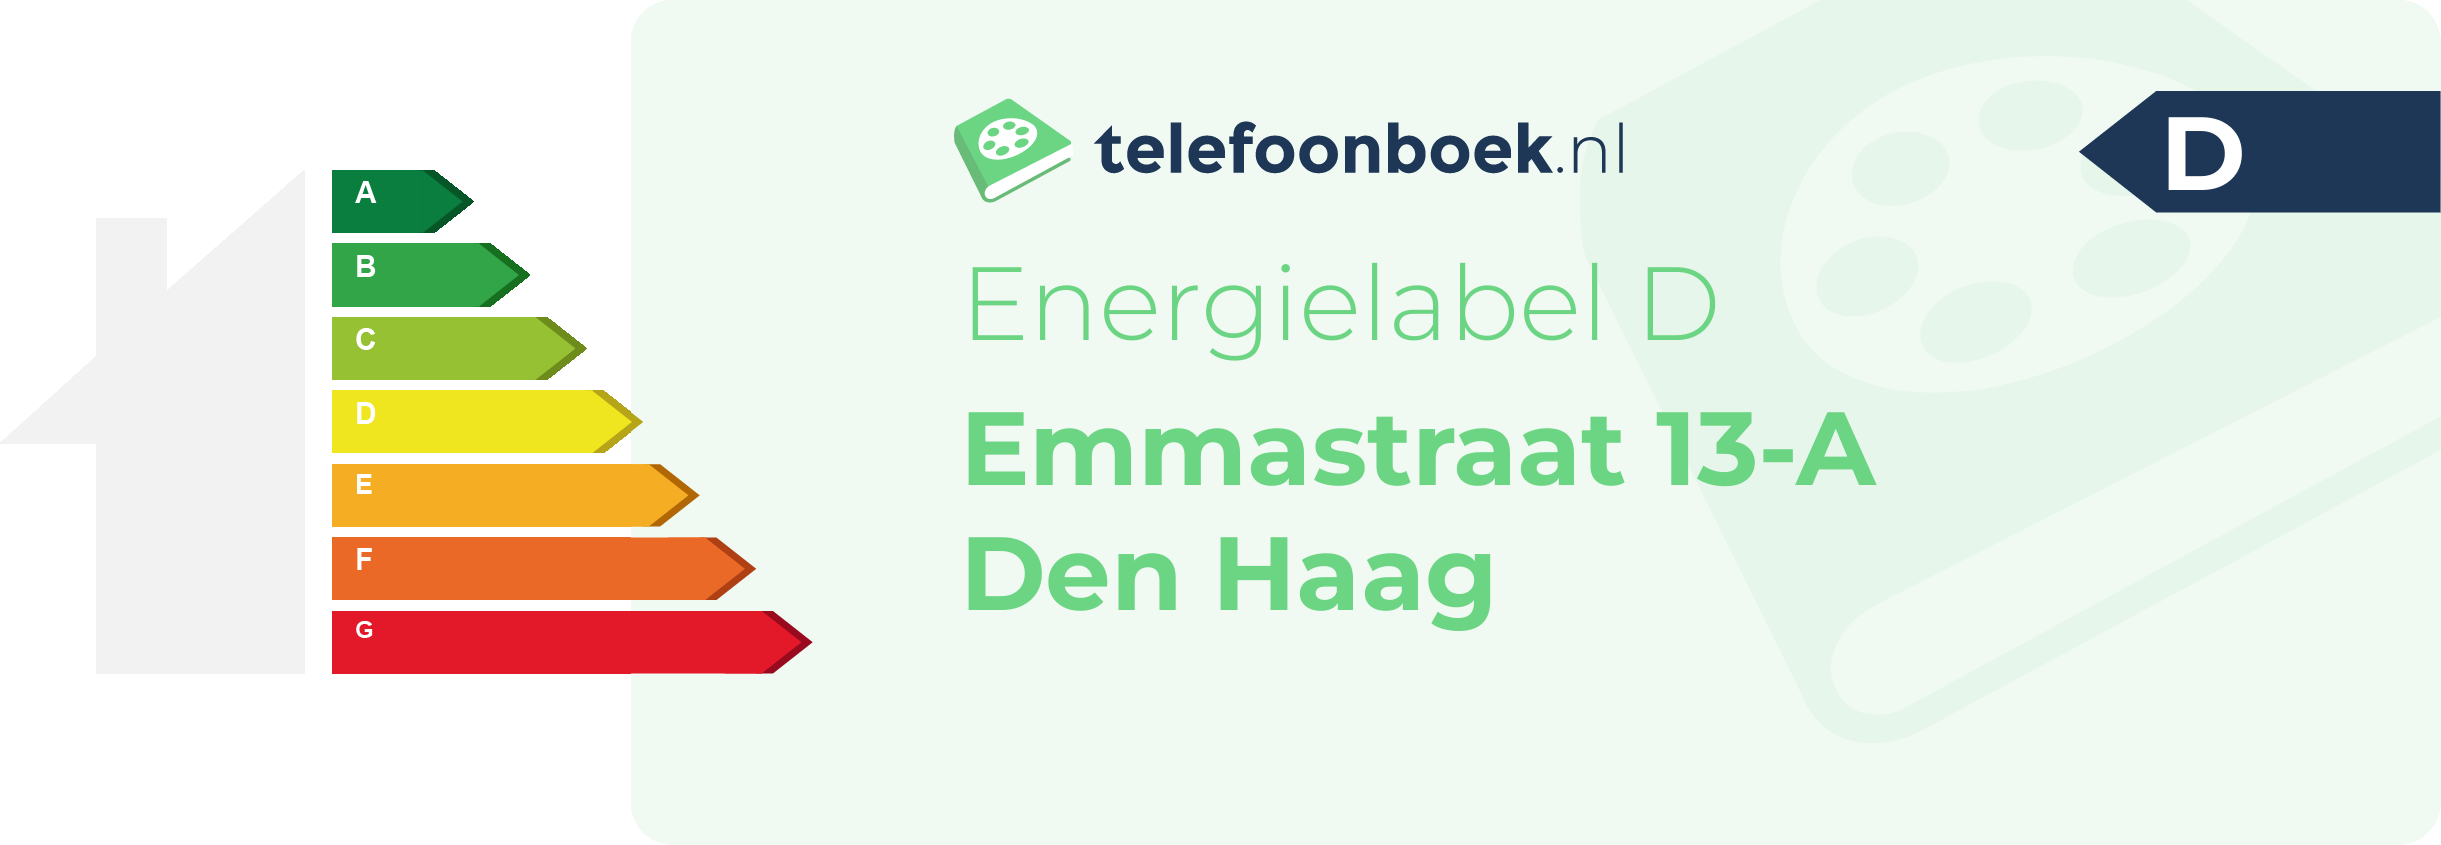 Energielabel Emmastraat 13-A Den Haag